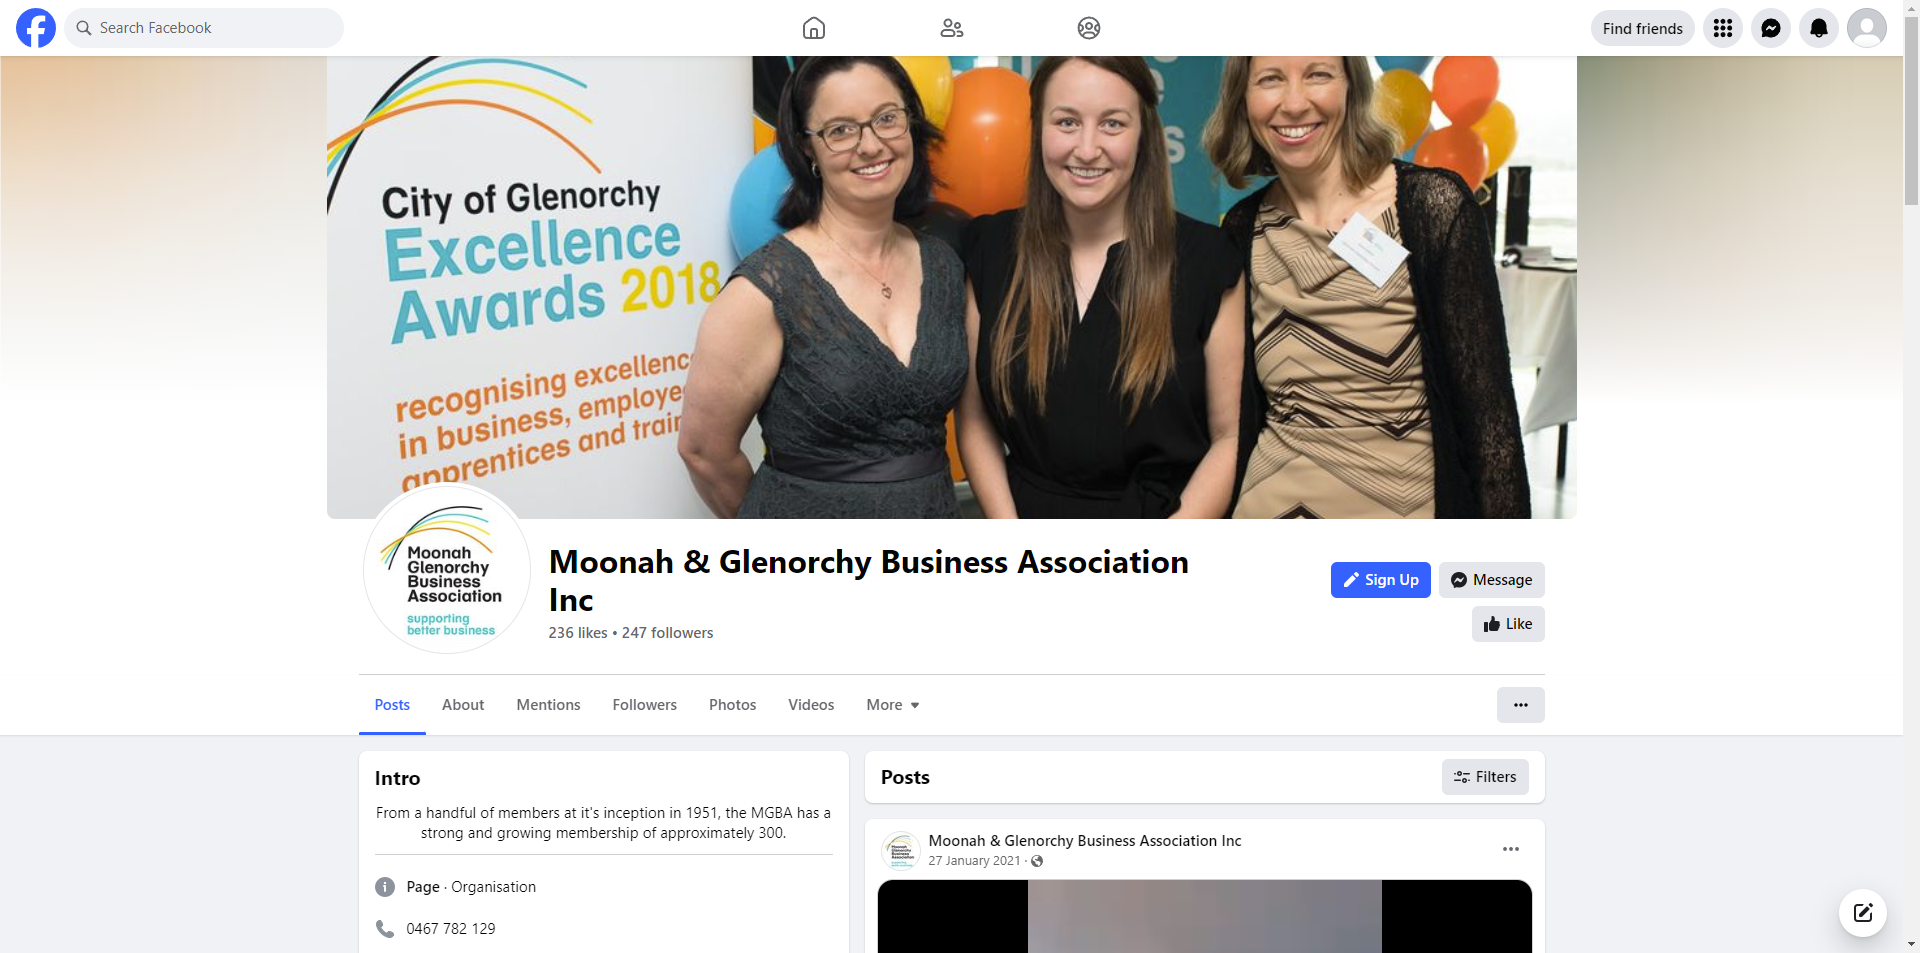 Moonah & Glenorchy Business Association Inc.